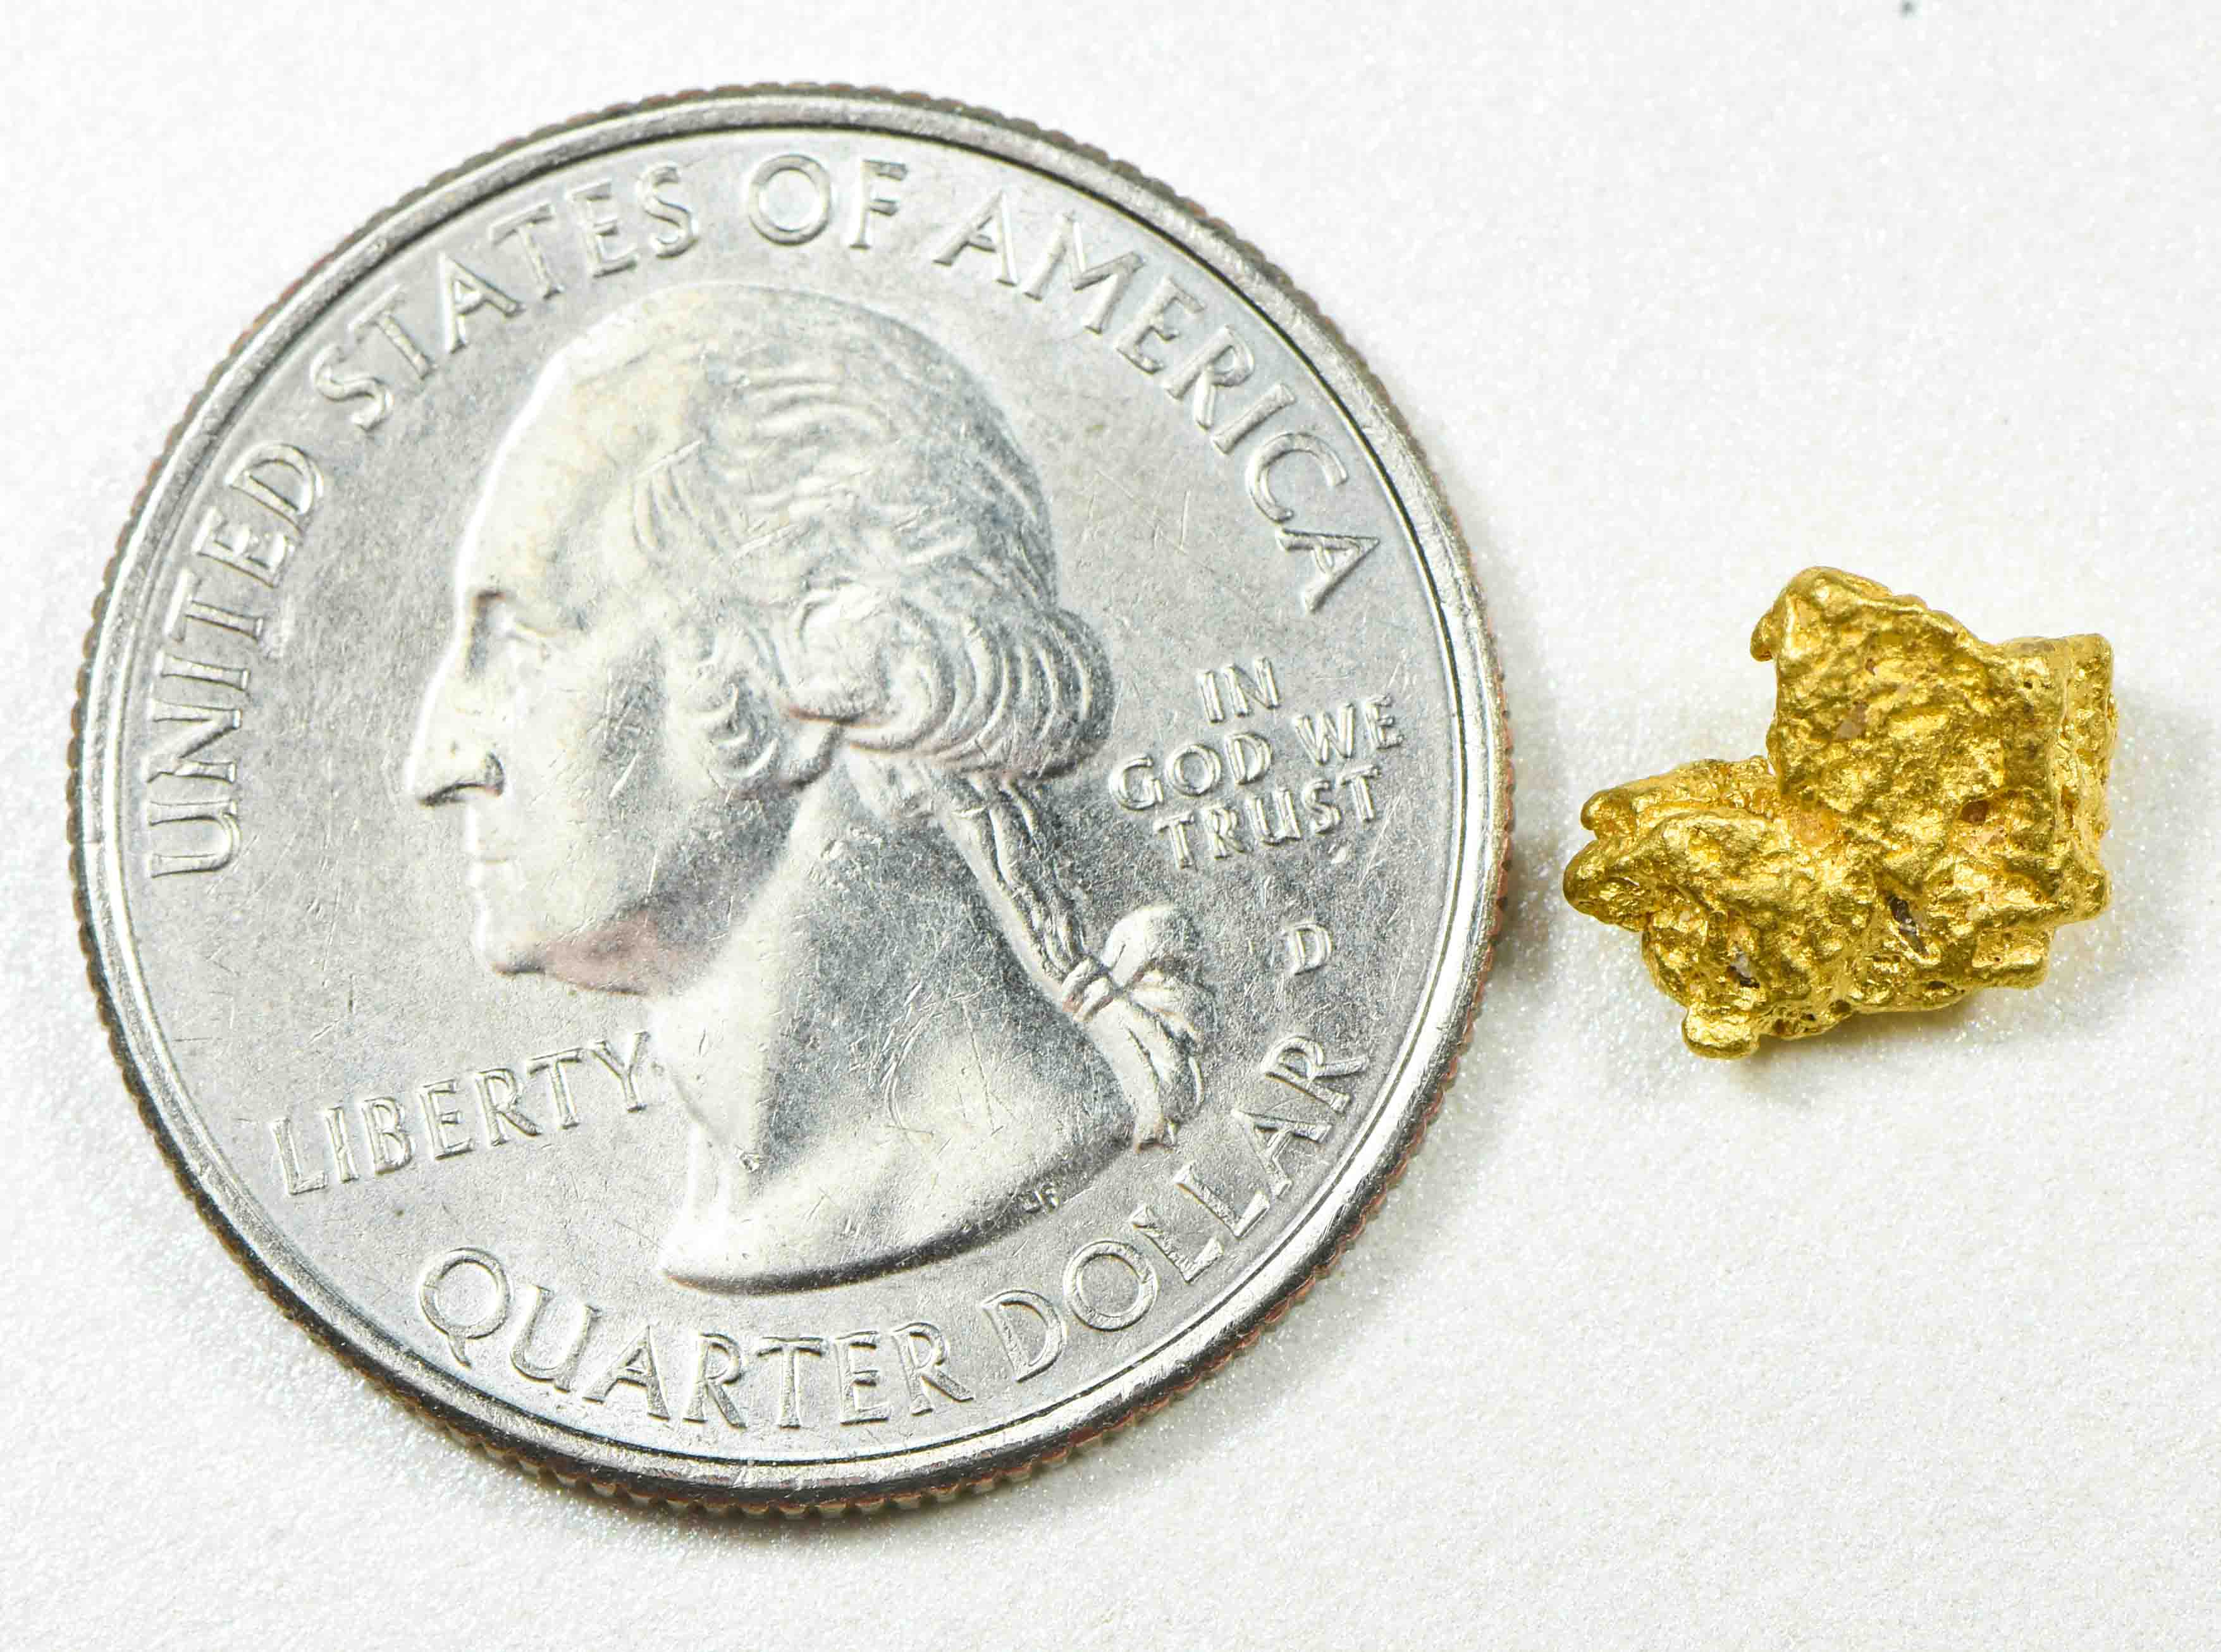 #753 Natural Gold Nugget Australian 1.44 Grams Genuine